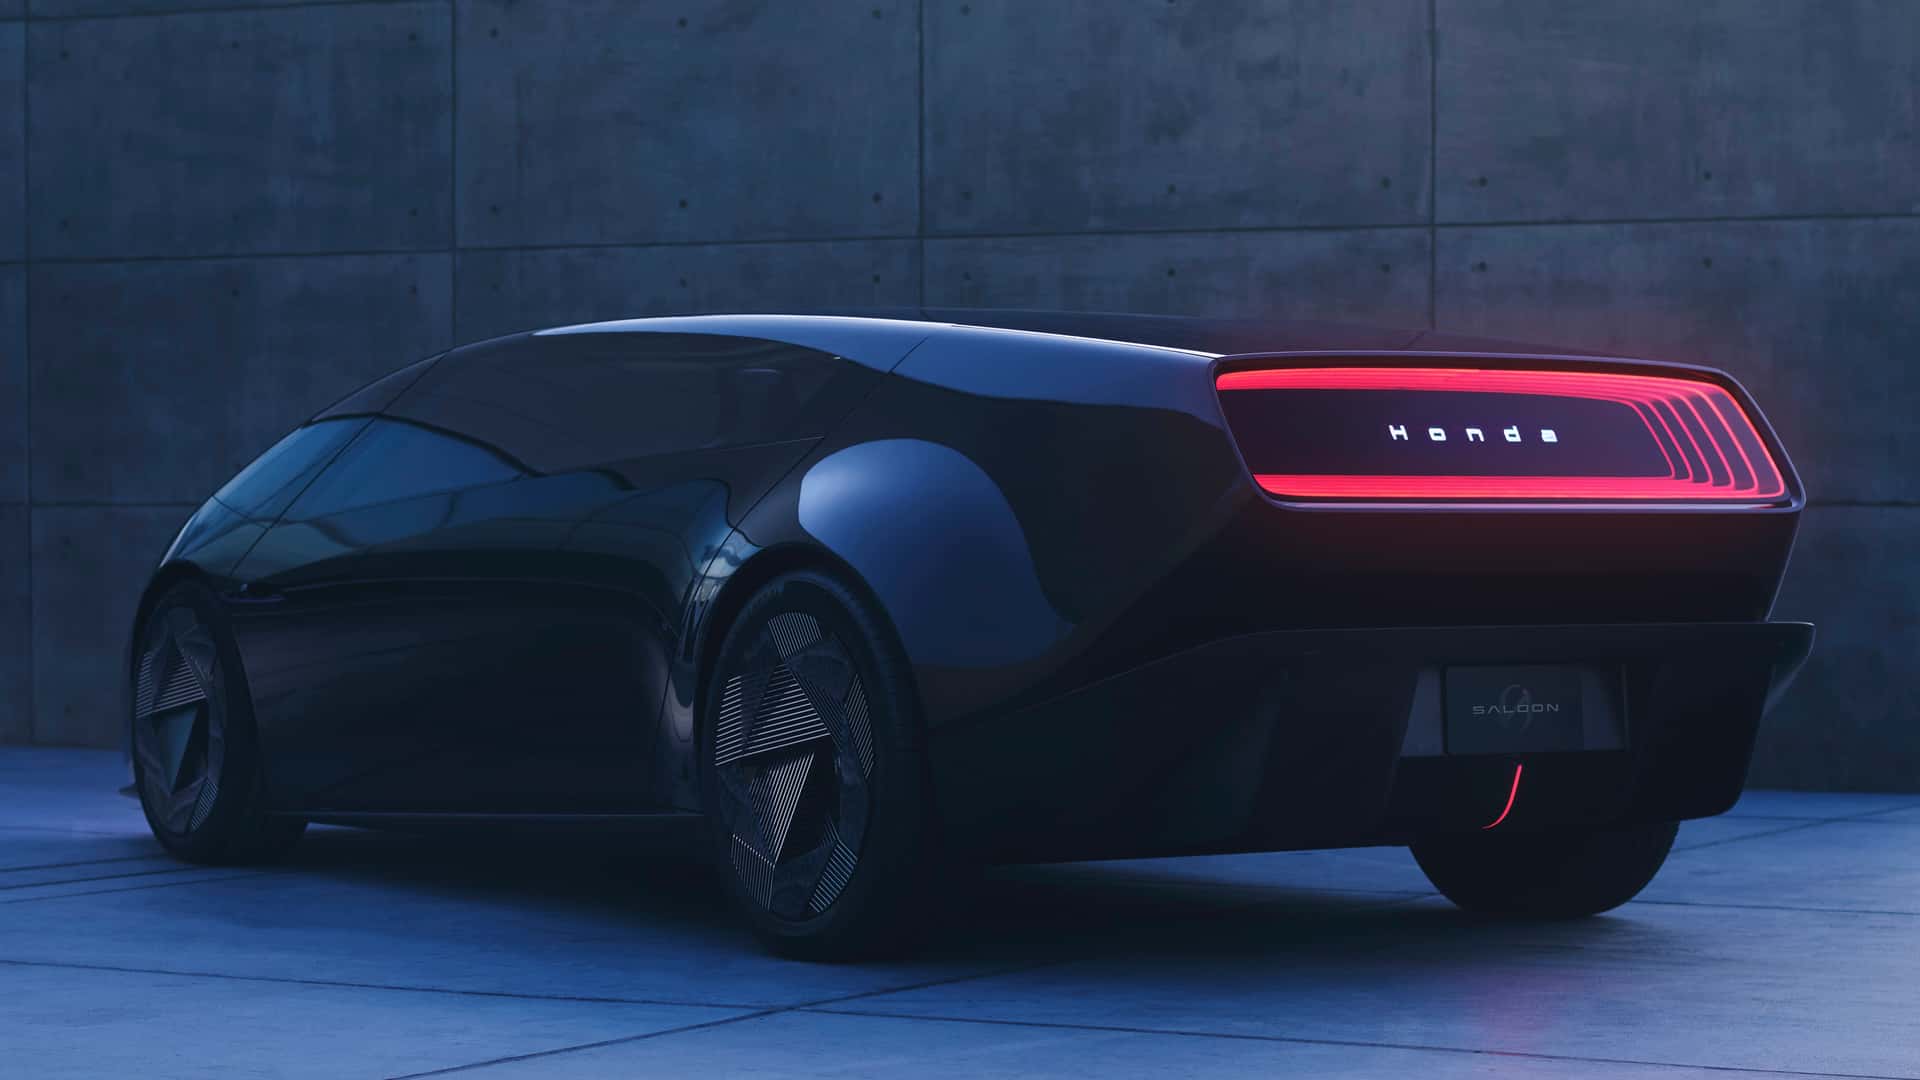 Saloon Honda EV Unveiled Futuristic Electric Cars Resembling Sci-Fi Movie Creations (1)